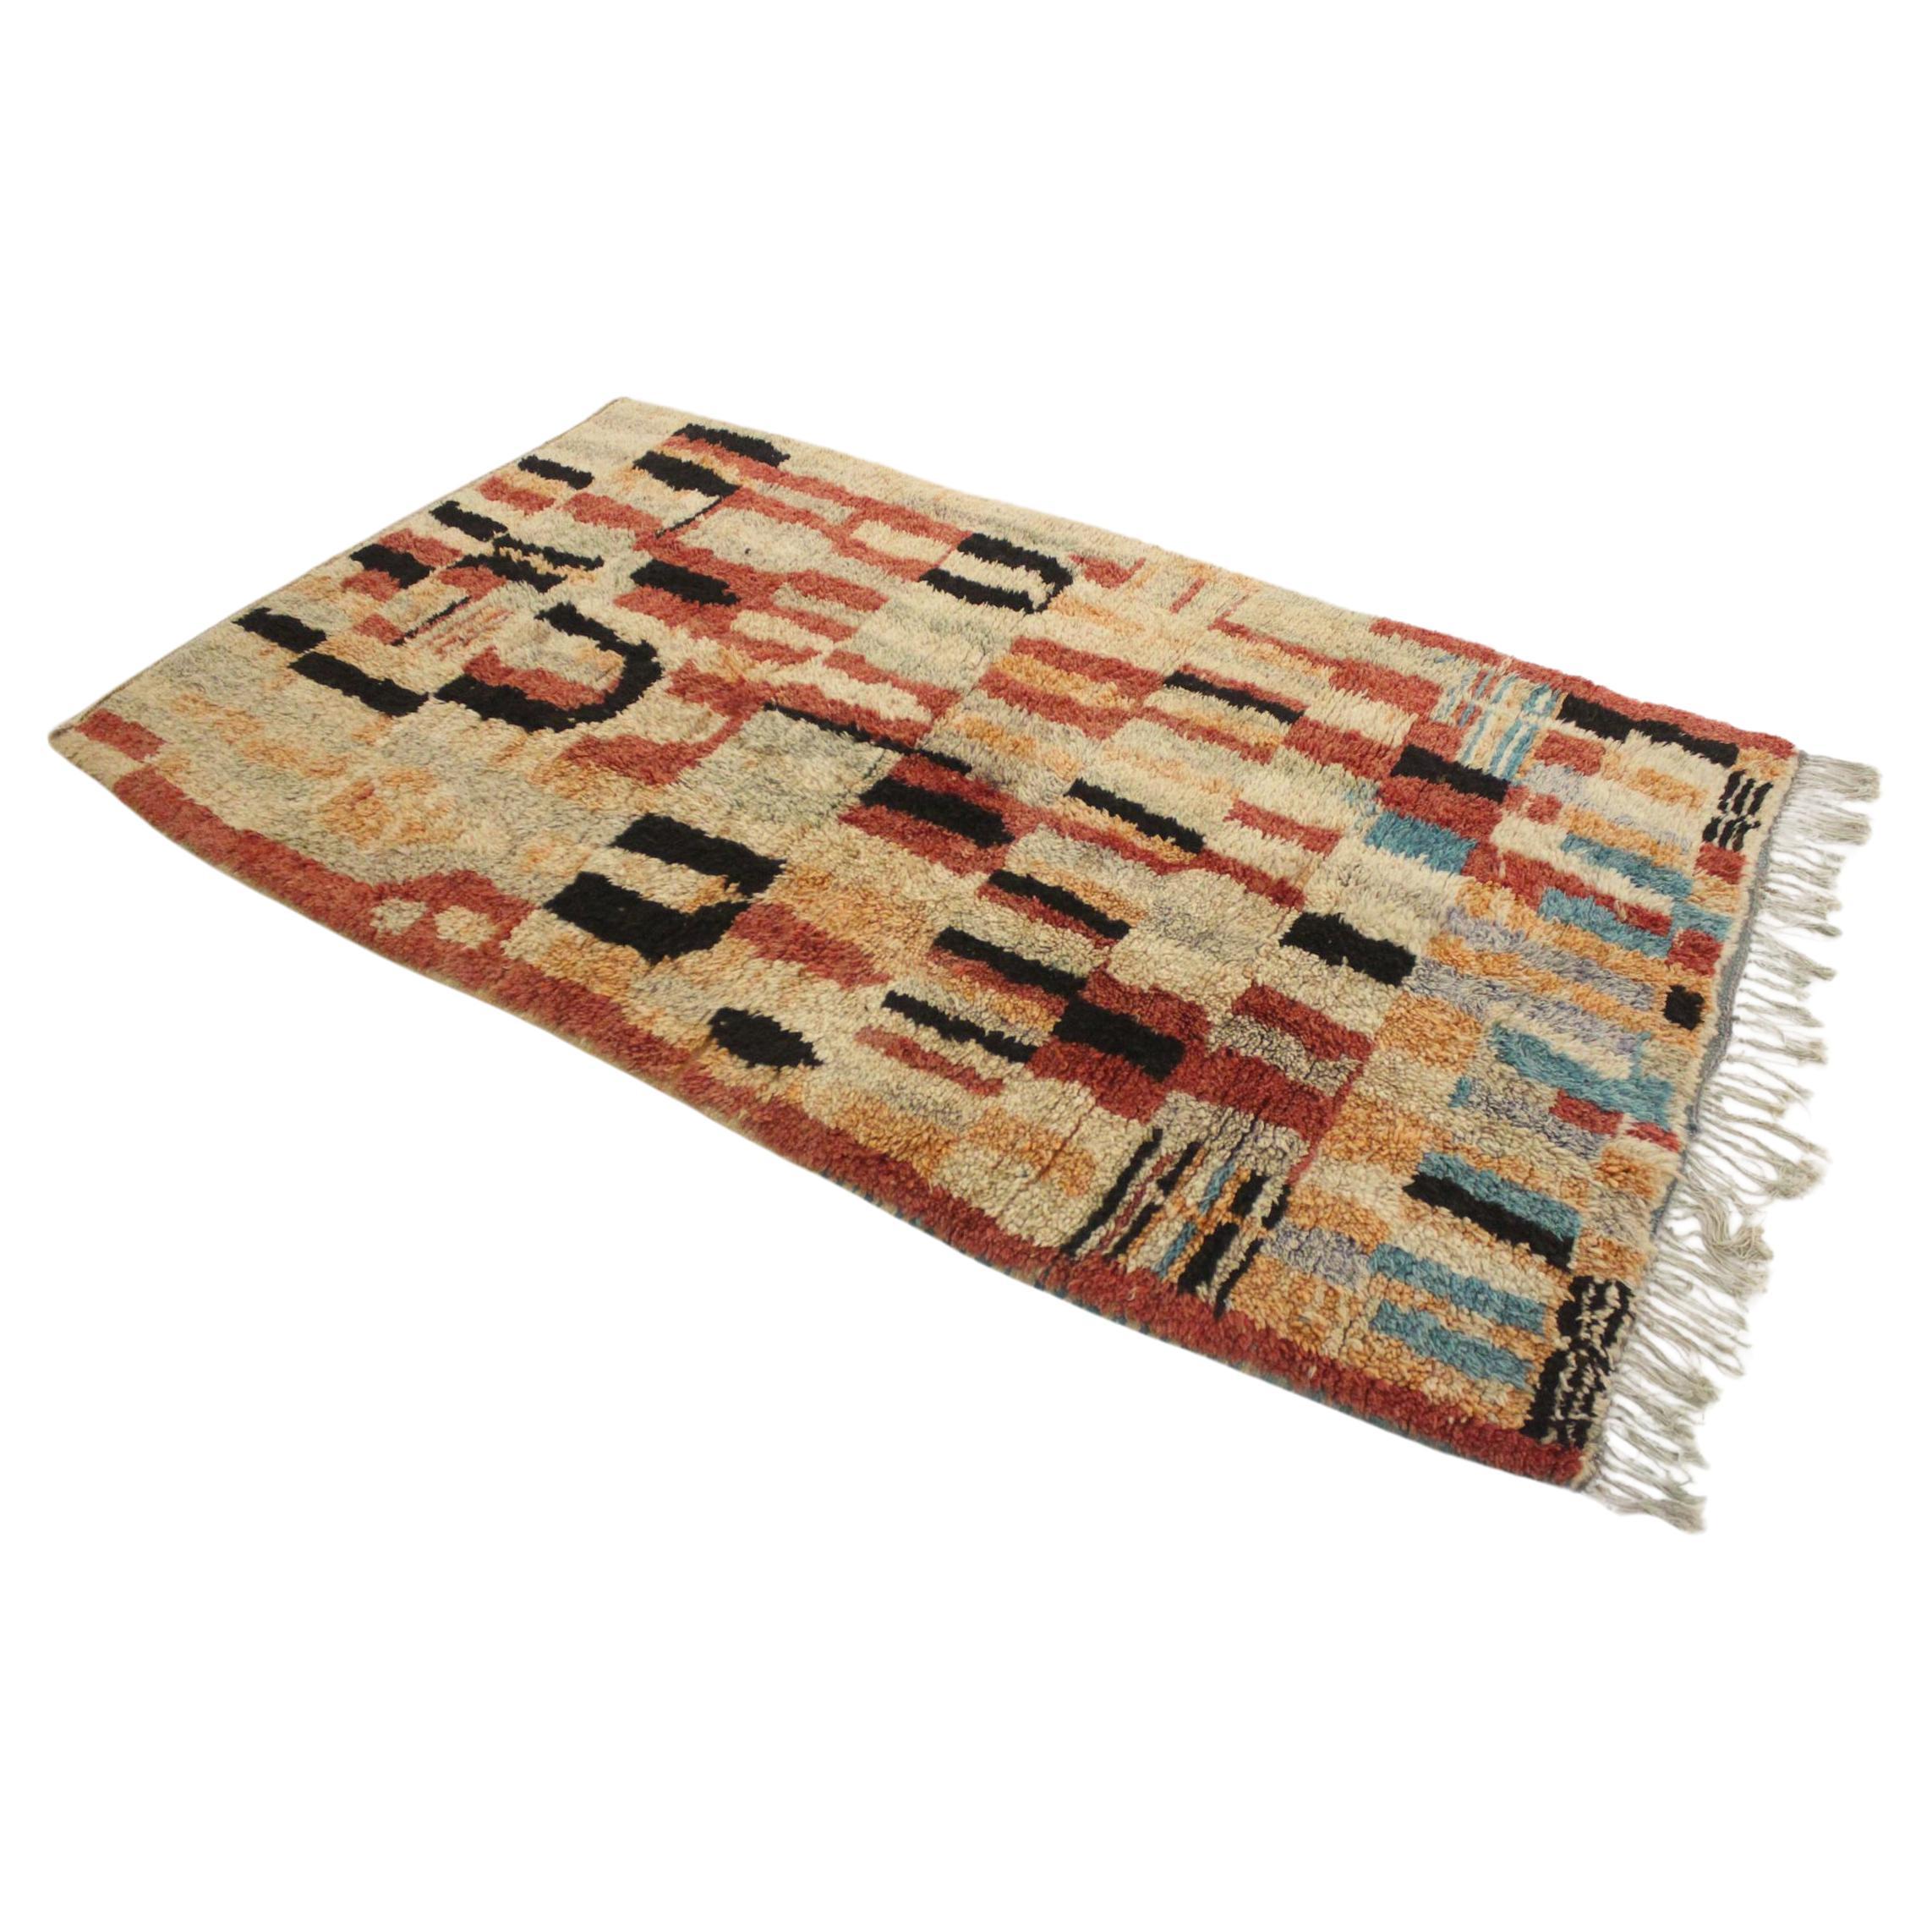 Vintage Moroccan Boujad rug - Terracotta/black - 5x8.6feet / 152x263cm For Sale